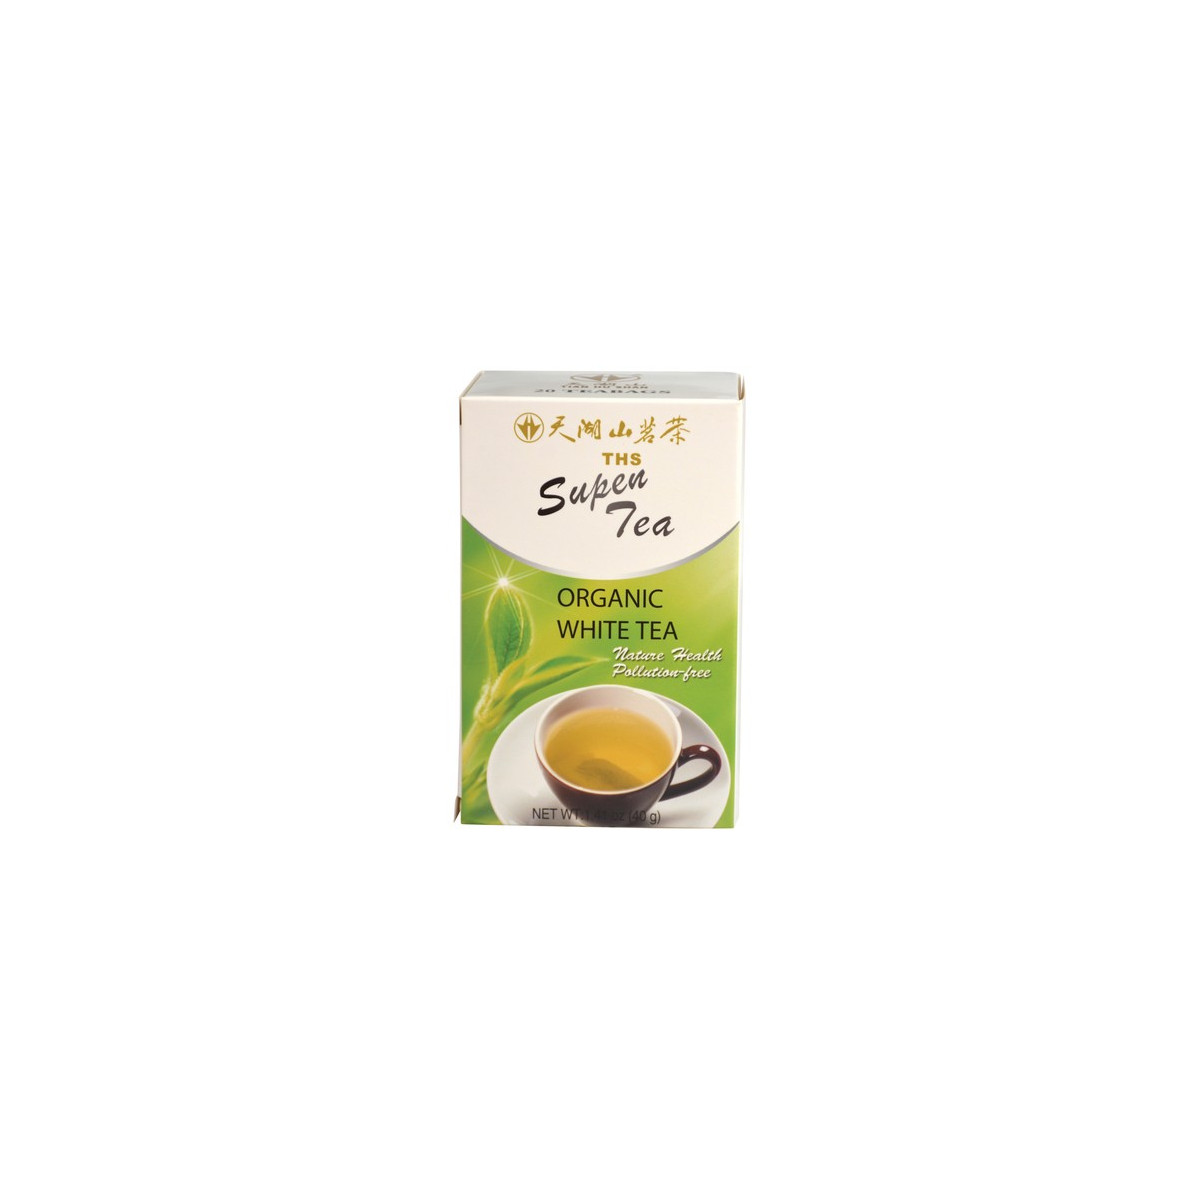 Ceai alb organic la plic 40g - Tian Hu Shan